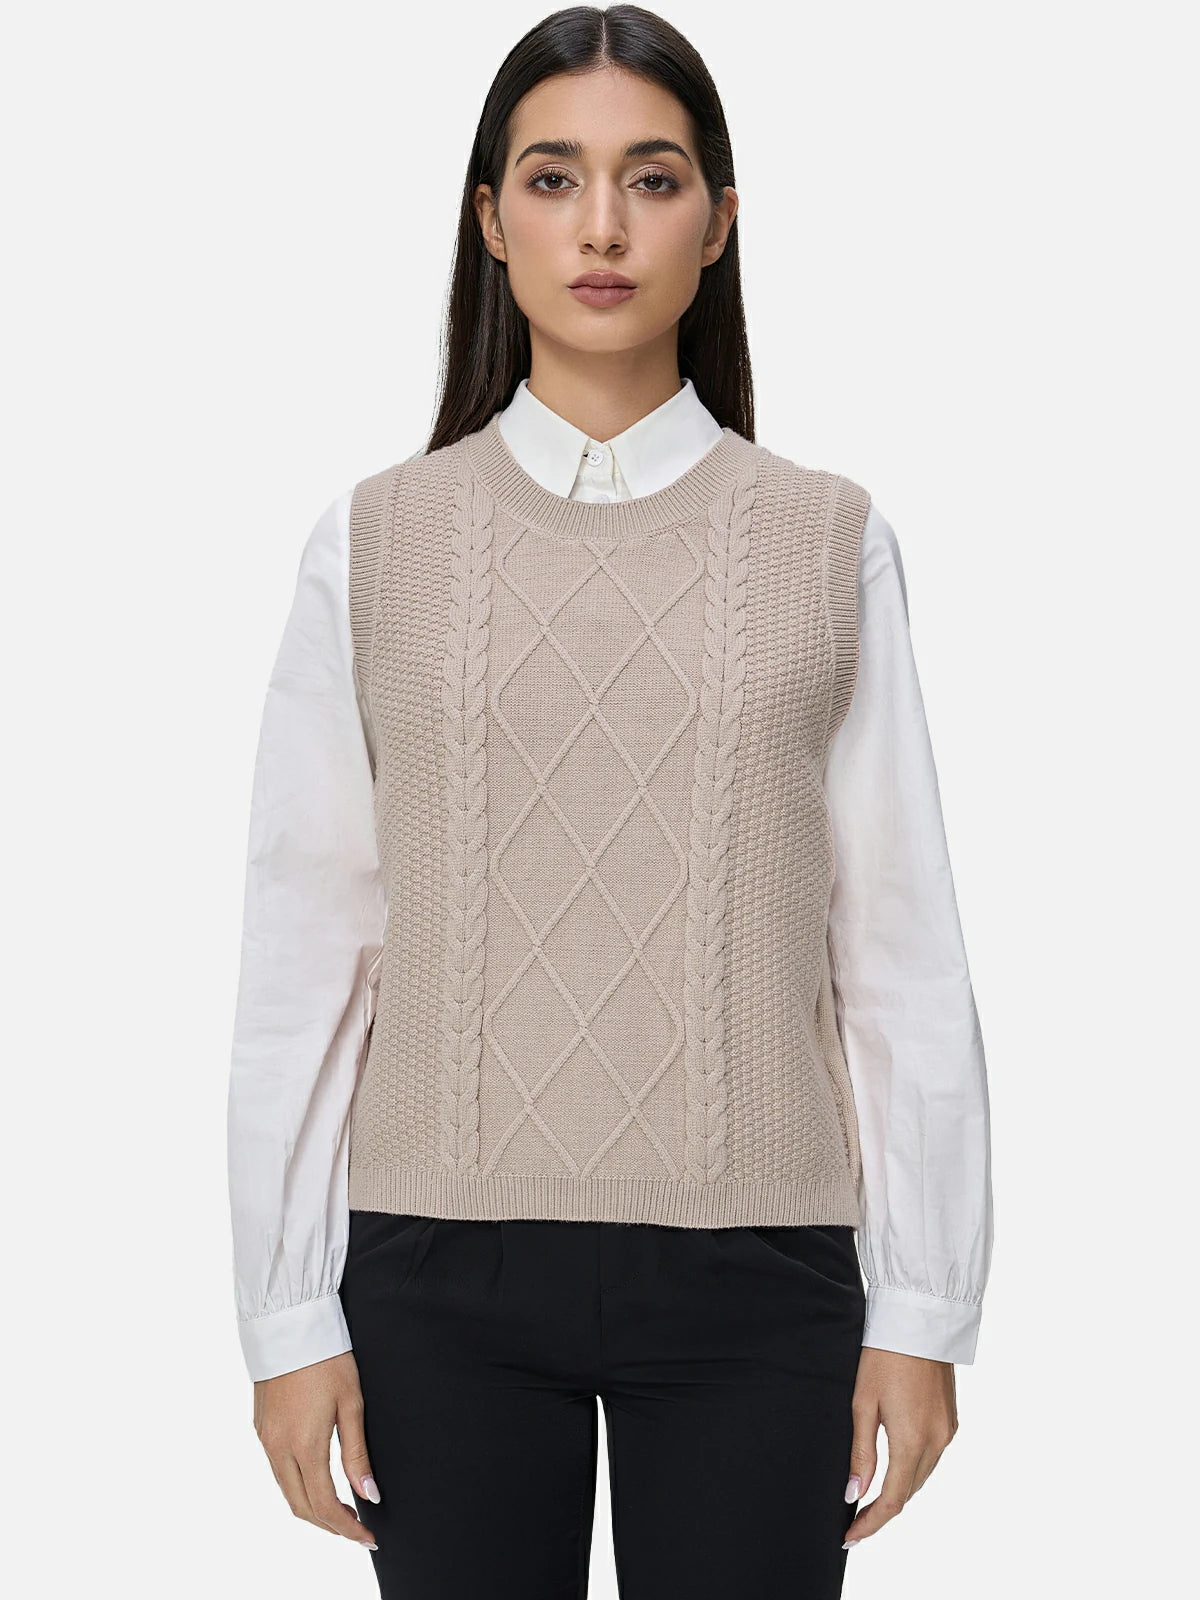 Stylish Apricot Knit Vest for Women&#39;s Winter Wardrobe